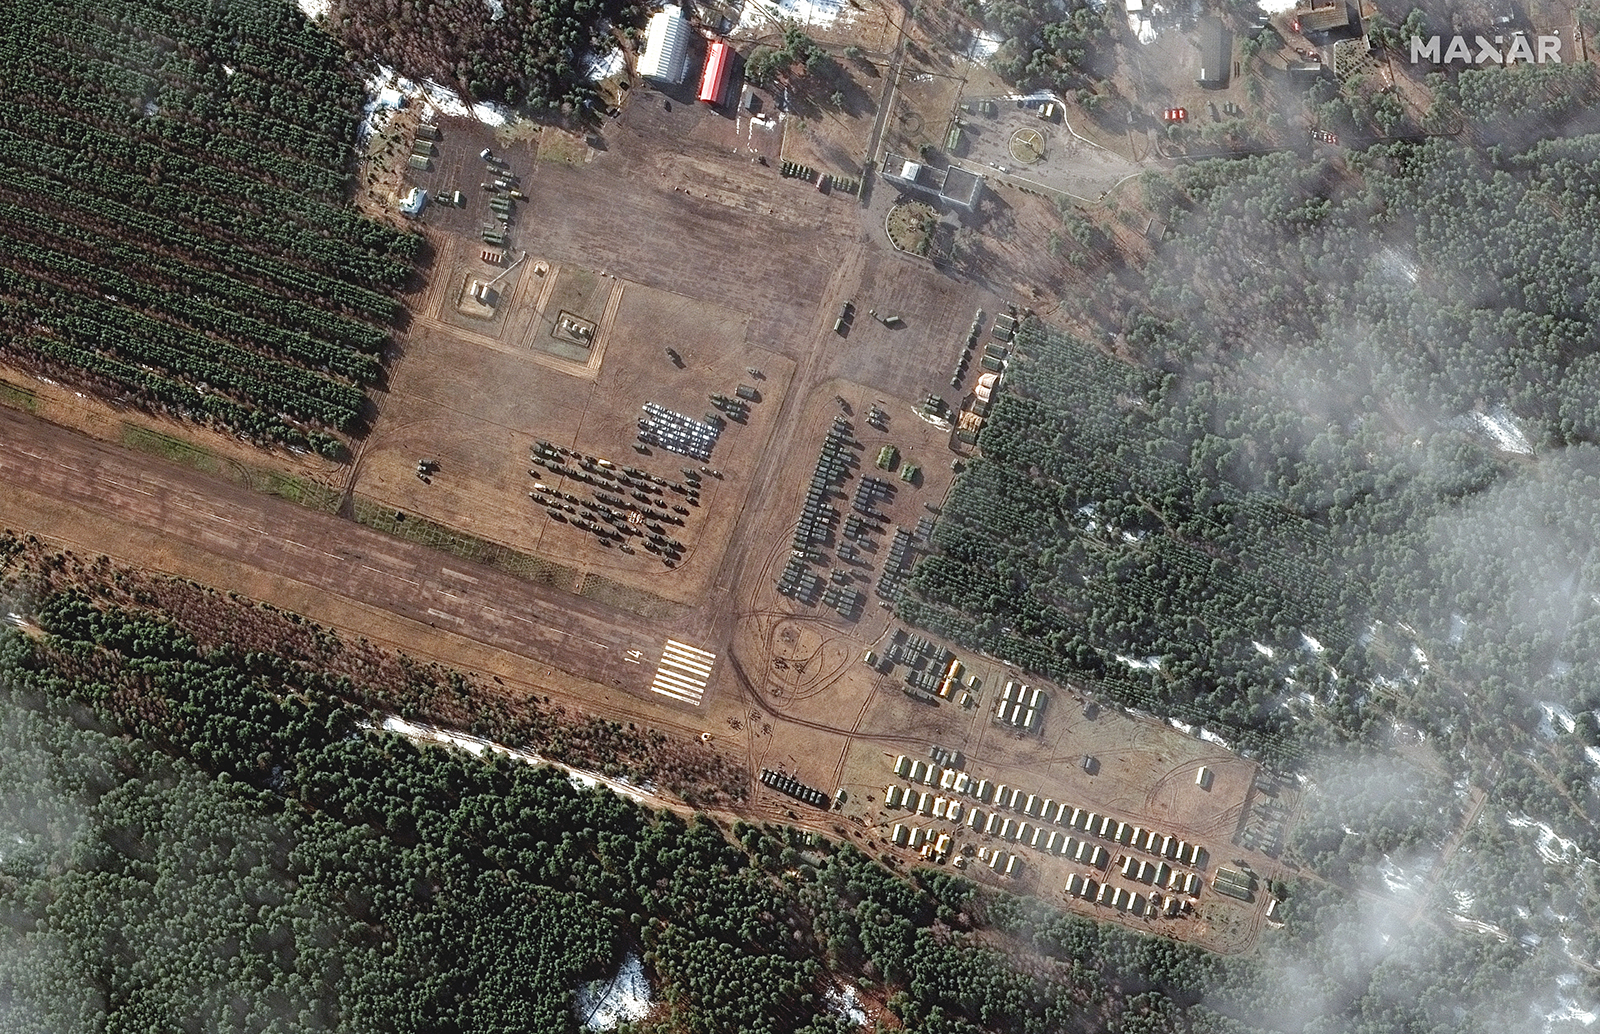 02_overview of new deployment at v d bolshoy bokov airfield_near mazyr belarus_22feb2022_wv3